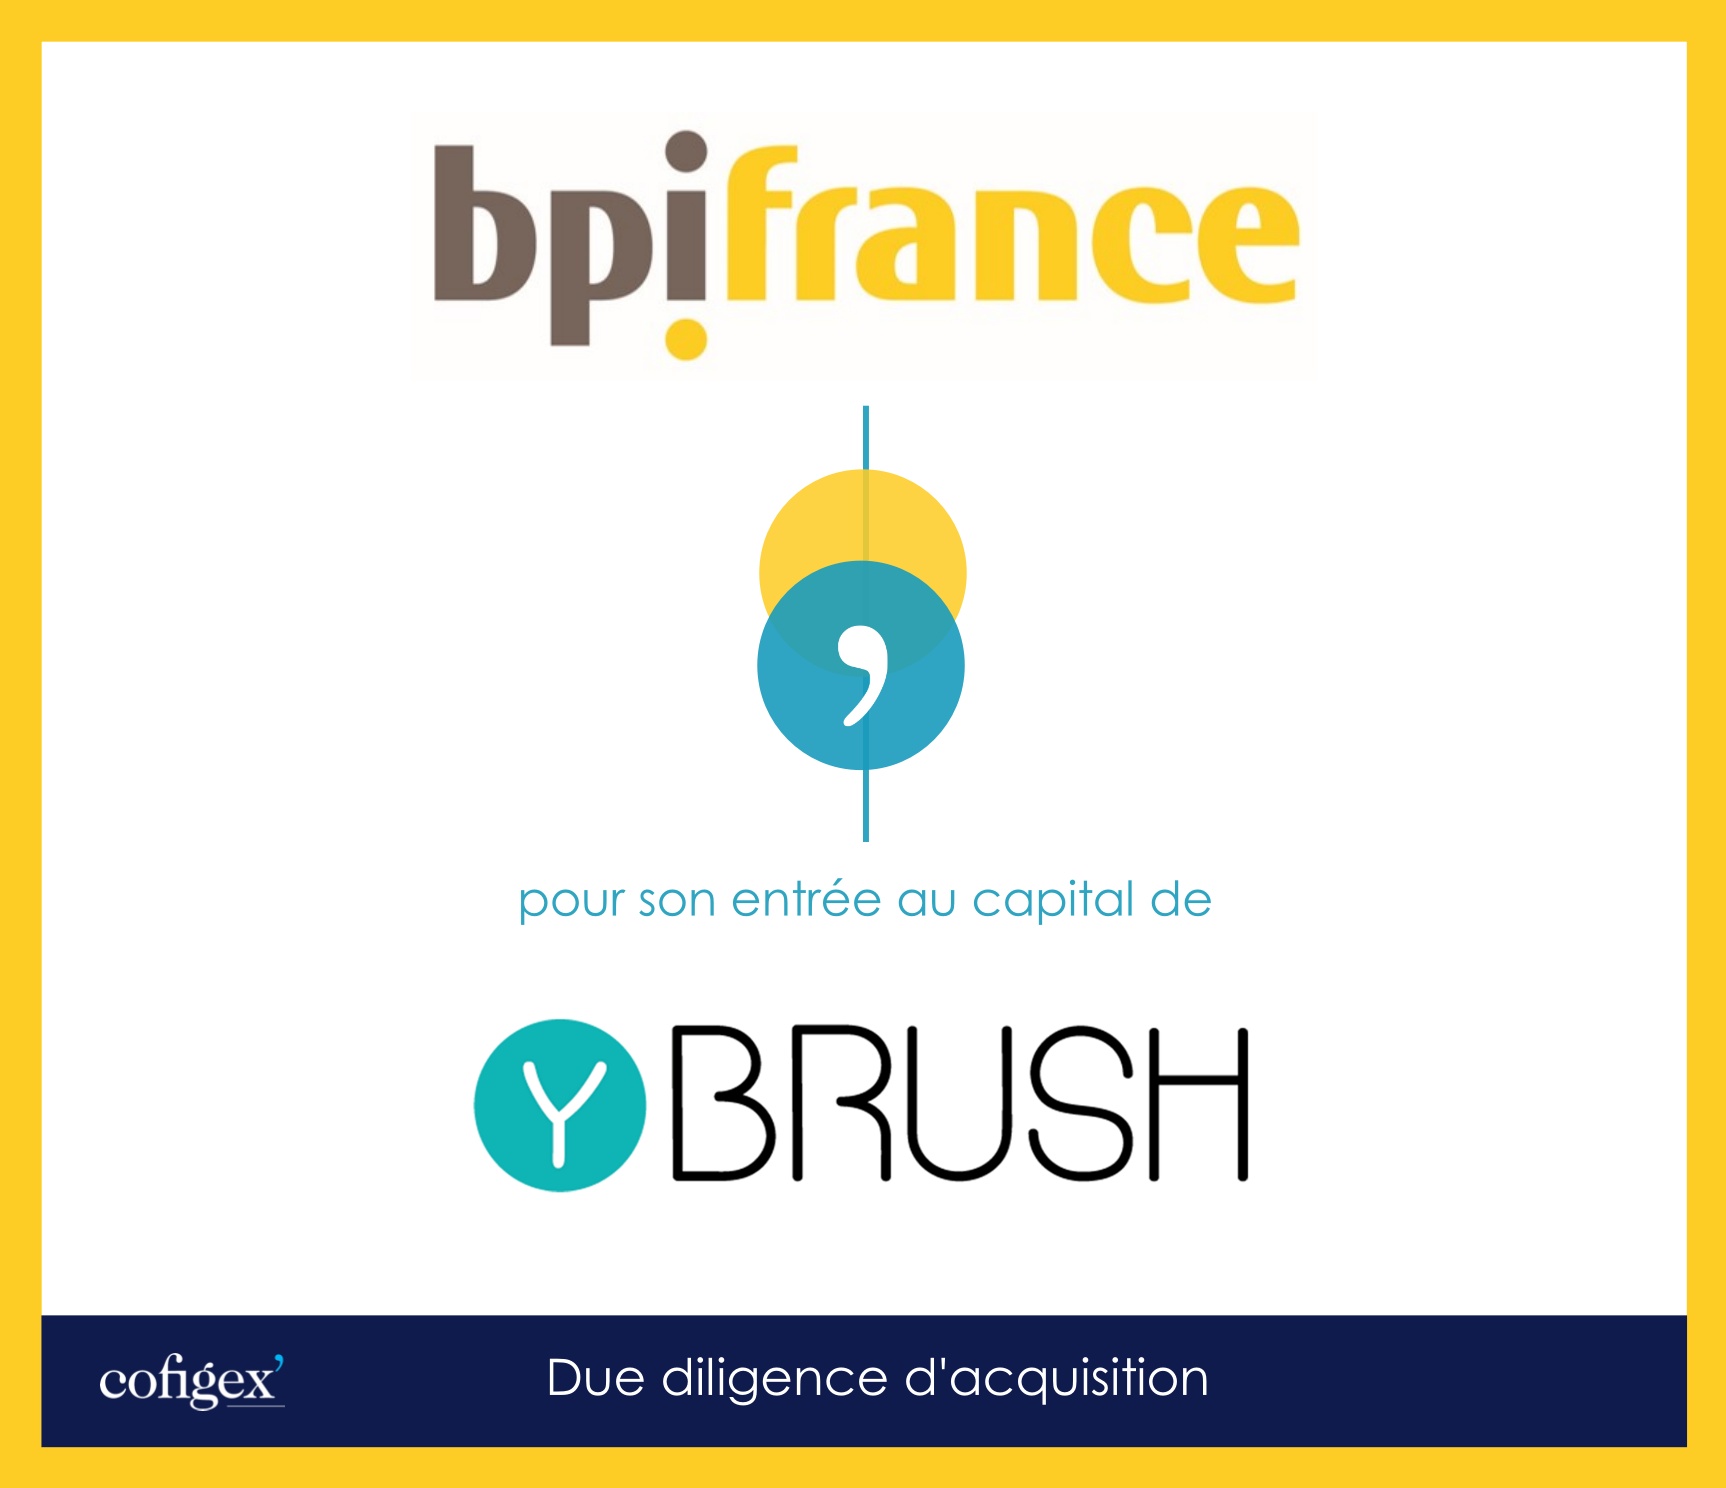 BPIFRANCE - Y-BRUSH